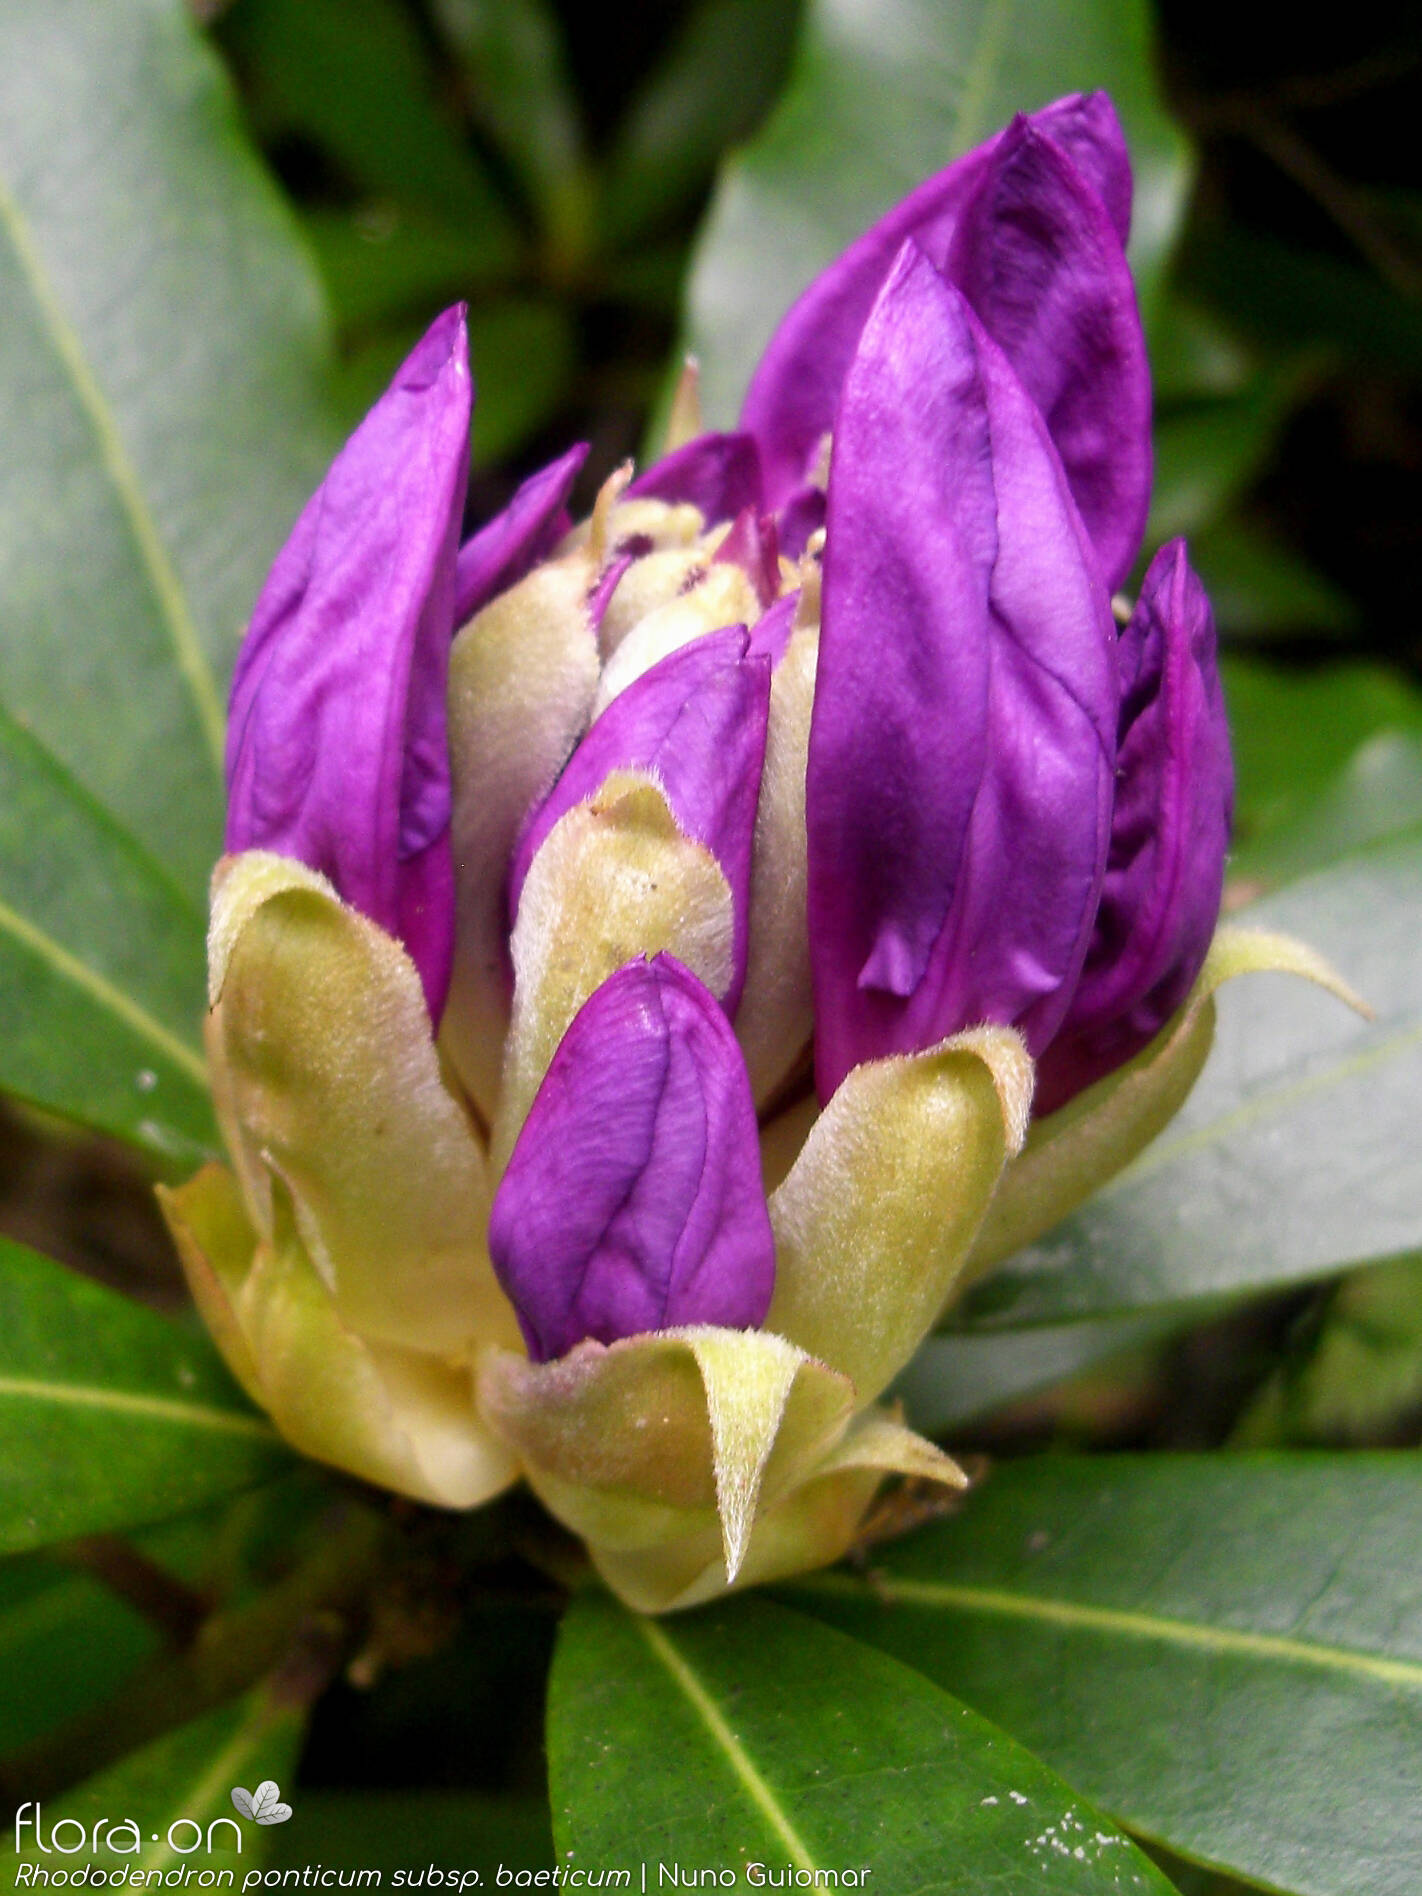 Rhododendron ponticum baeticum - Flor (geral) | Nuno Guiomar; CC BY-NC 4.0